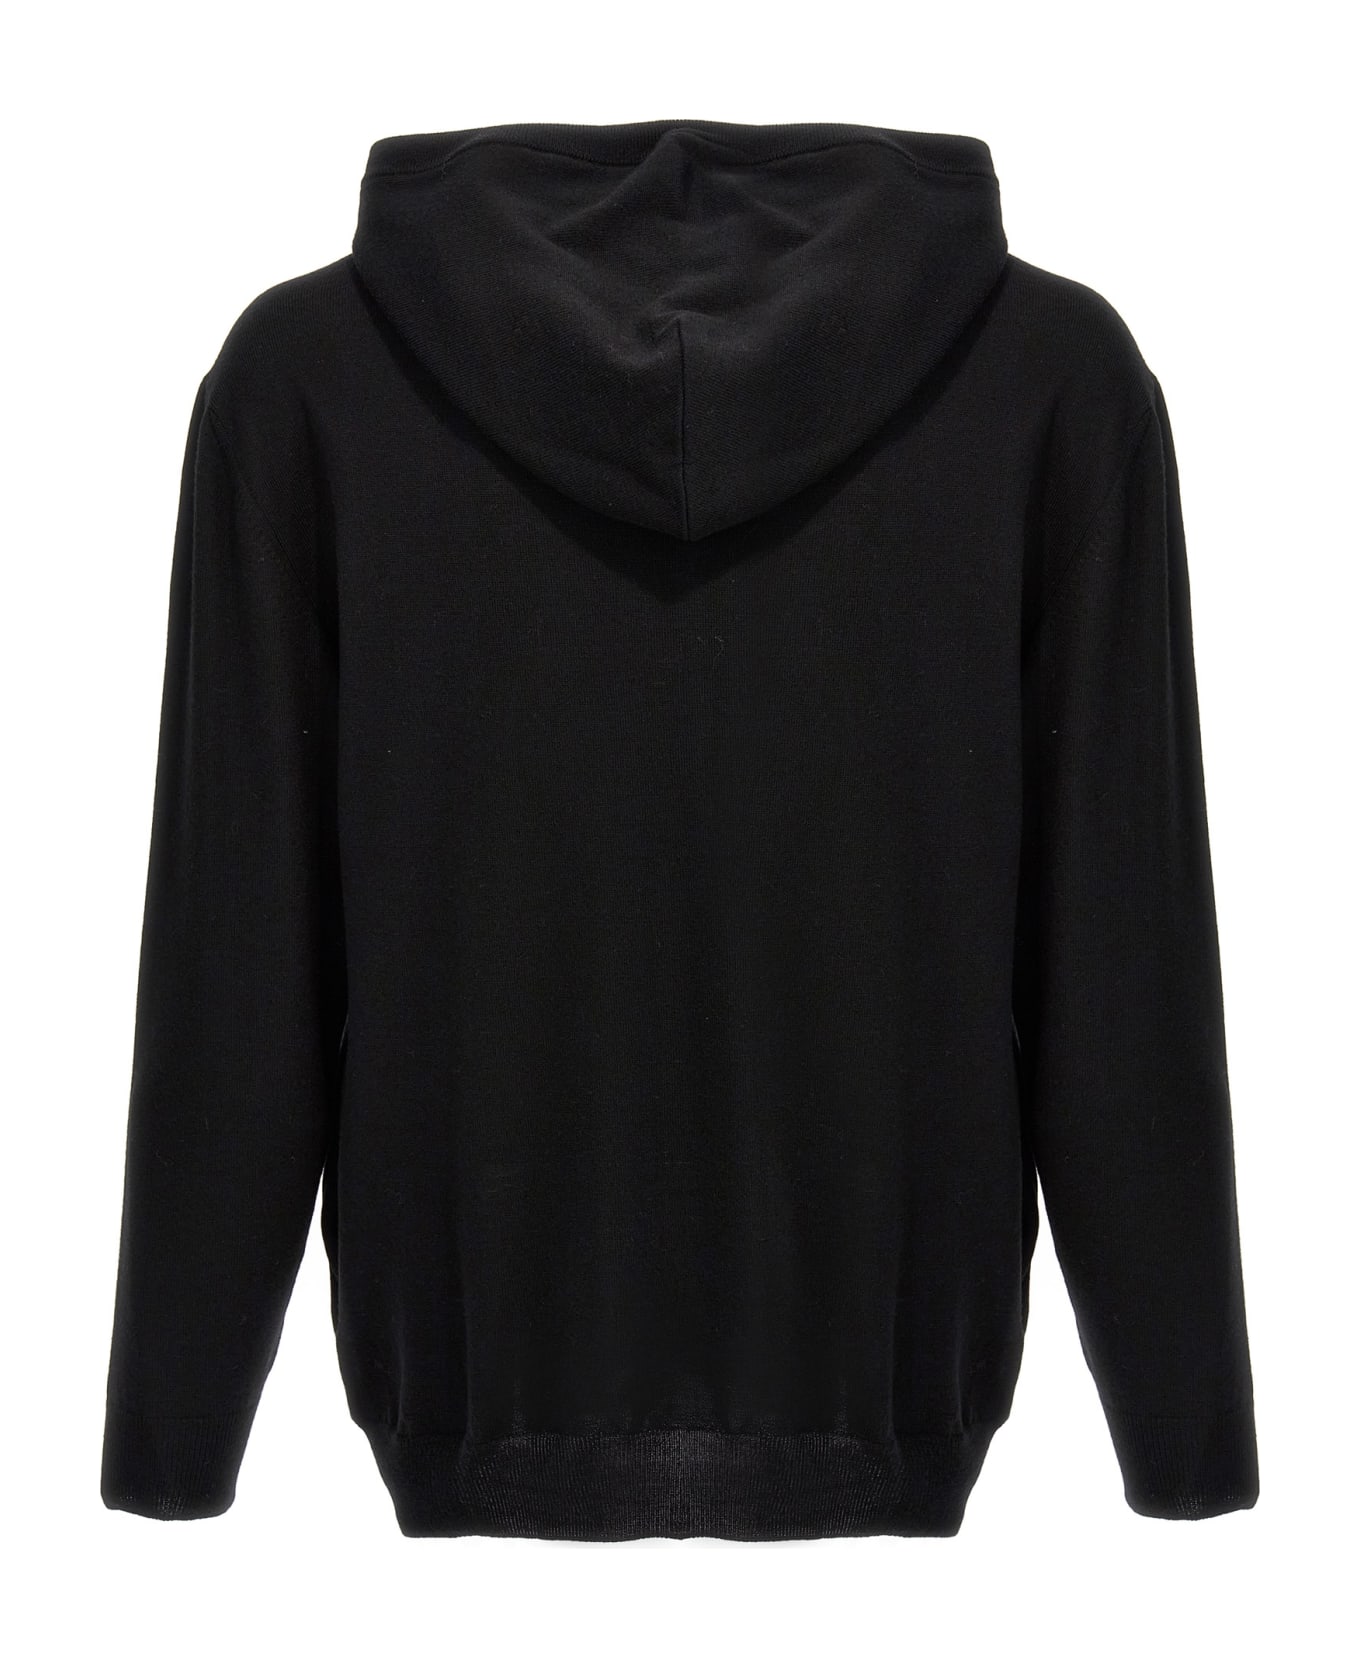 Moschino Teddy Hooded Sweater - Black  